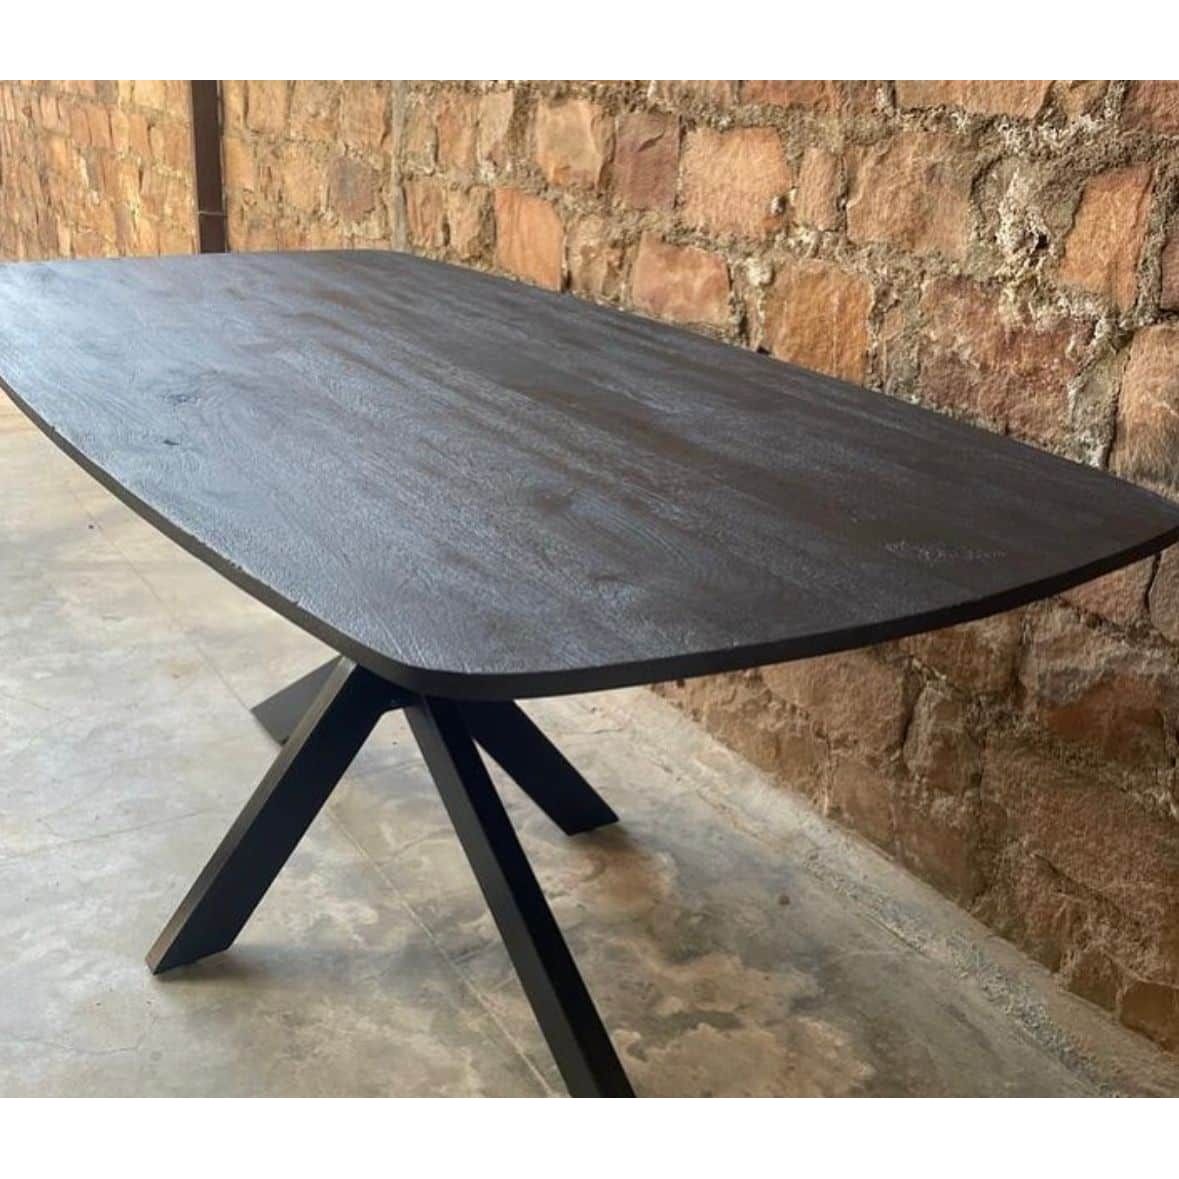 Bahia table Danish oval black - 240cm